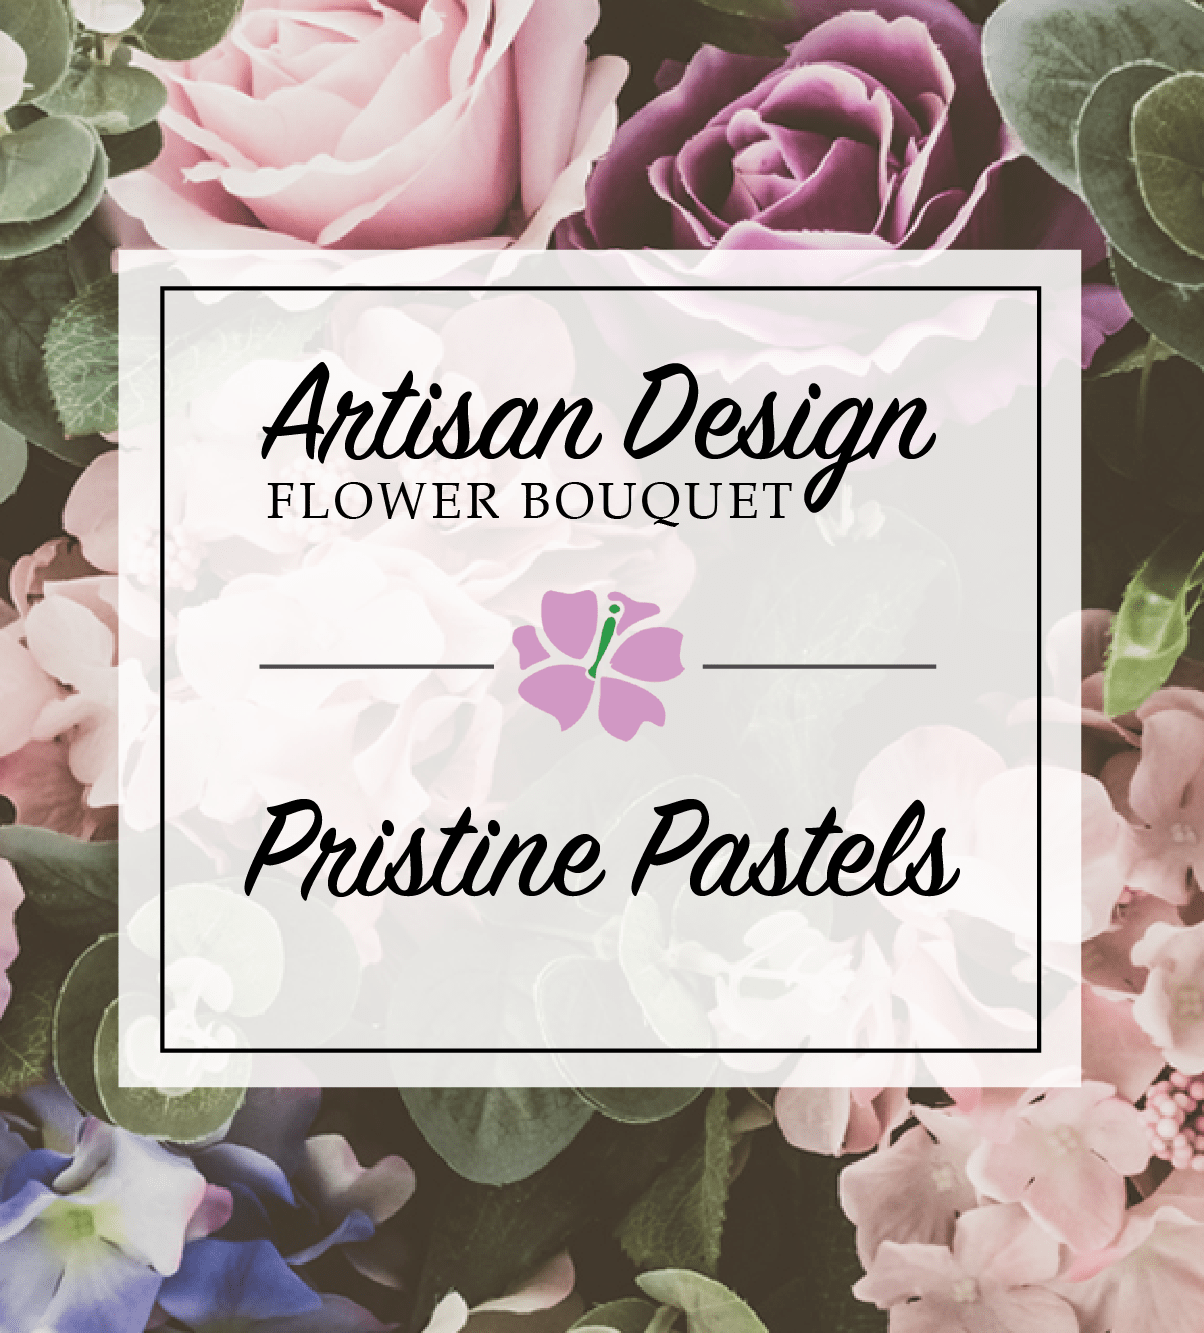 Artist's Design: Pristine Pastels | Avas Flowers